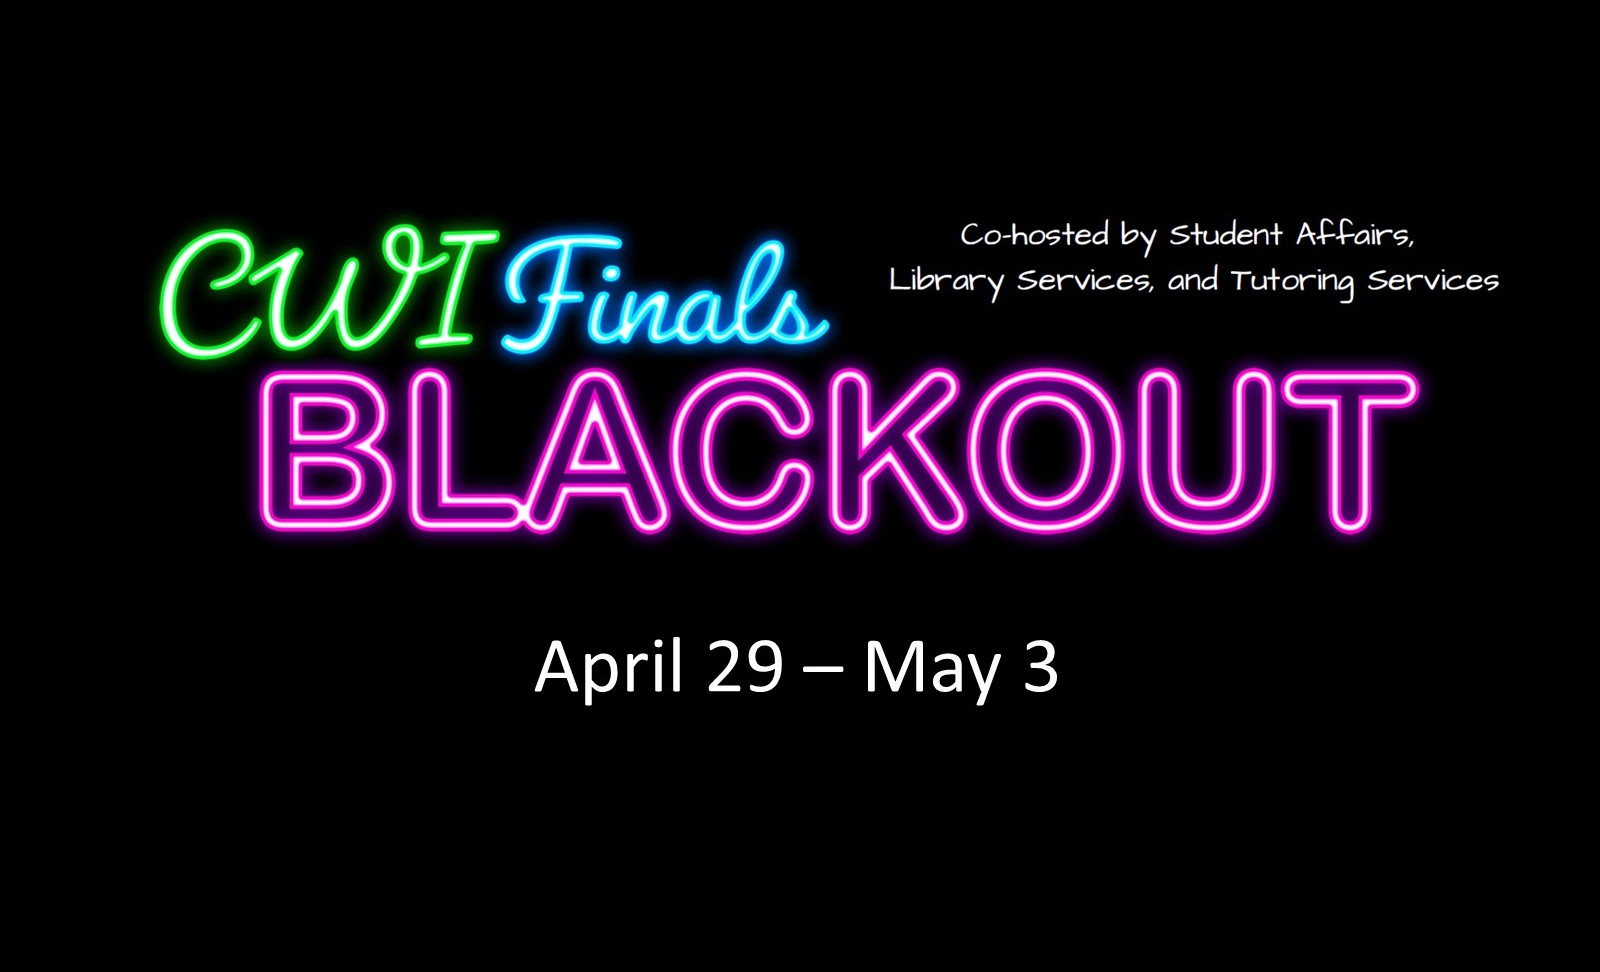 CWI Finals Blackout April 29 - May 3